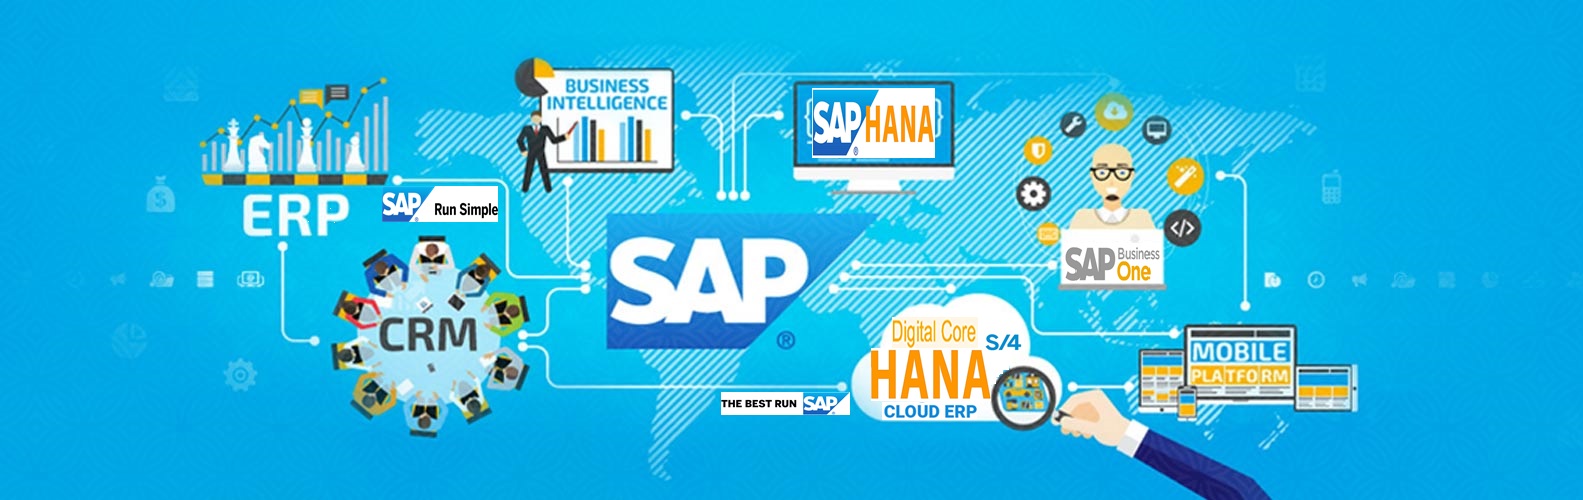 Not Stop Information Technology Network Services L.L.C. ERP Solutions offer SAP HANA, SAP S/4 HANA, SAP Business One